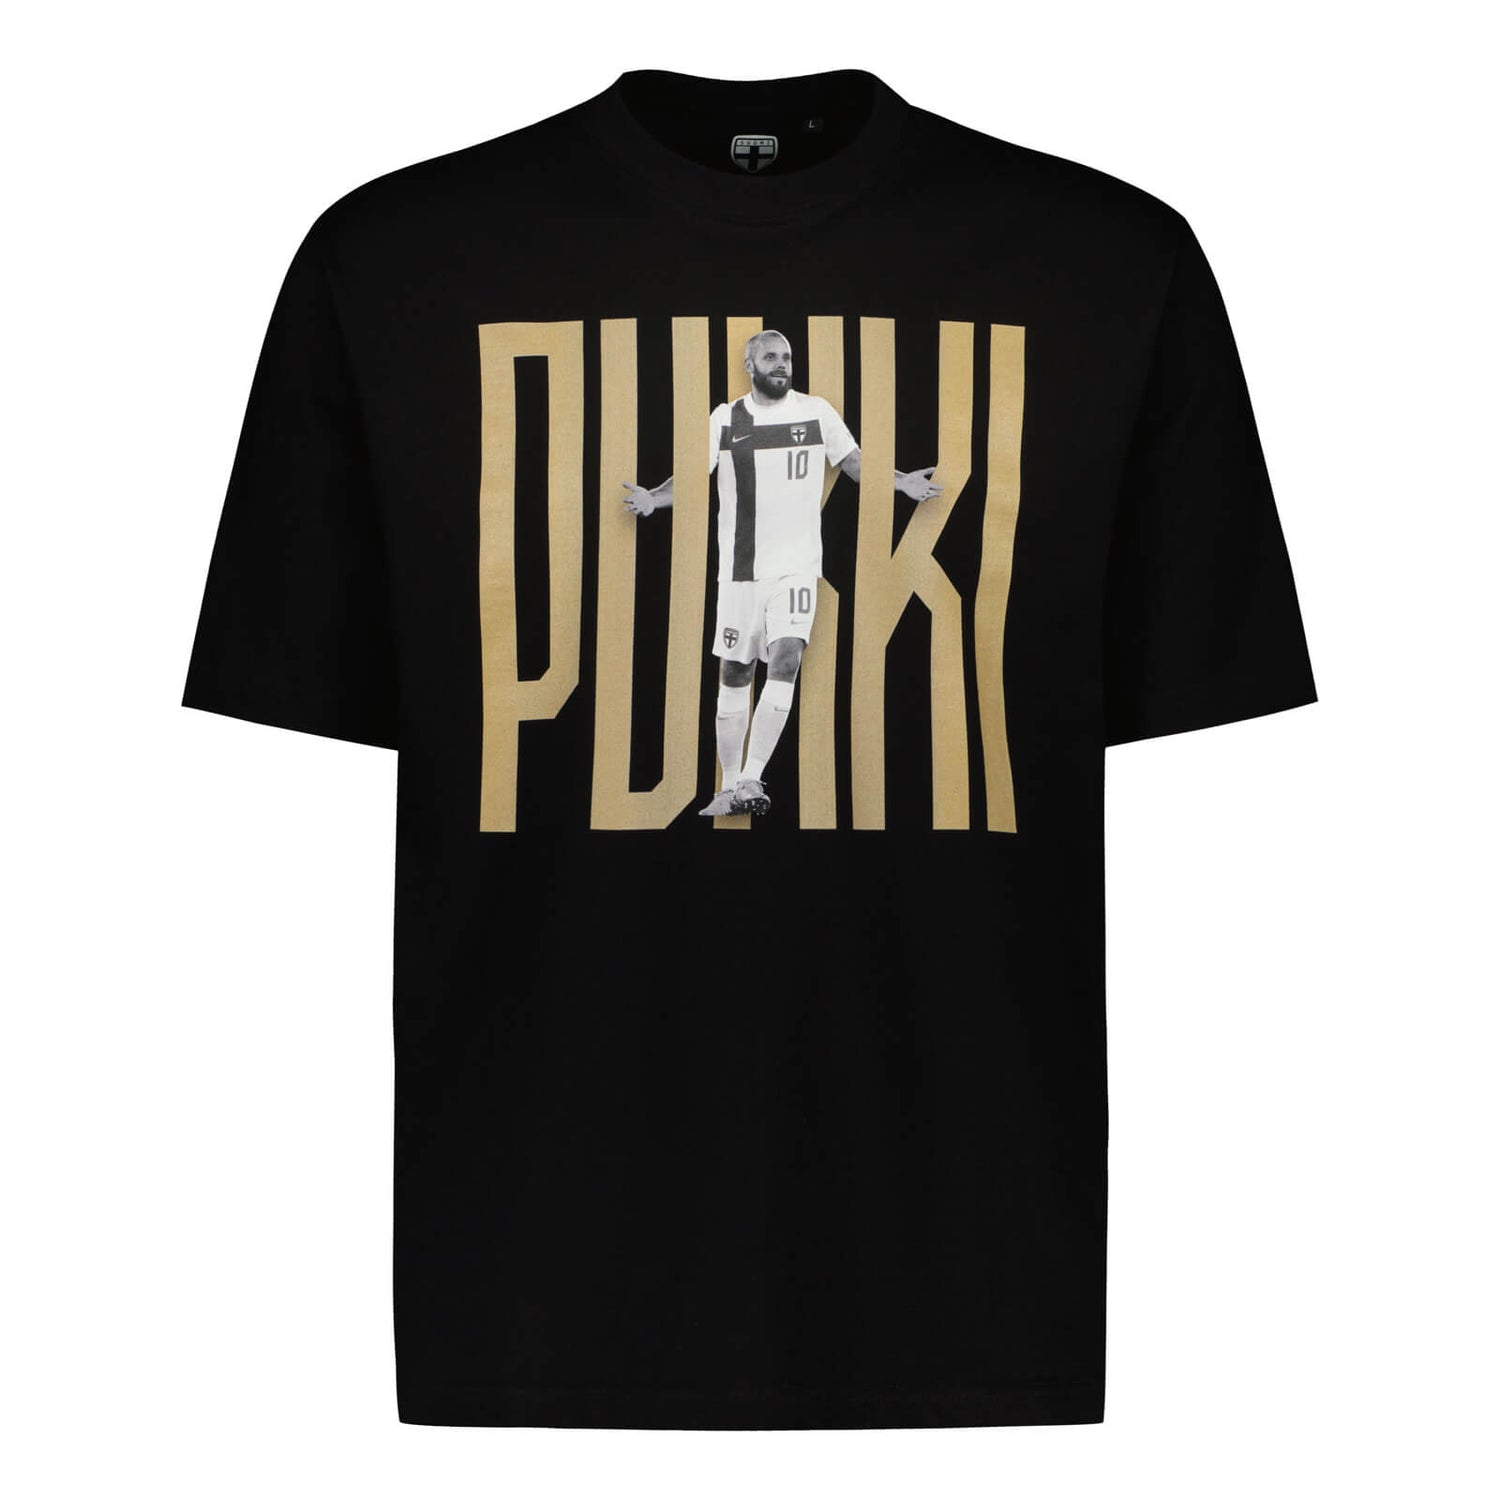 Teemu Pukki Fan T-shirt, Black